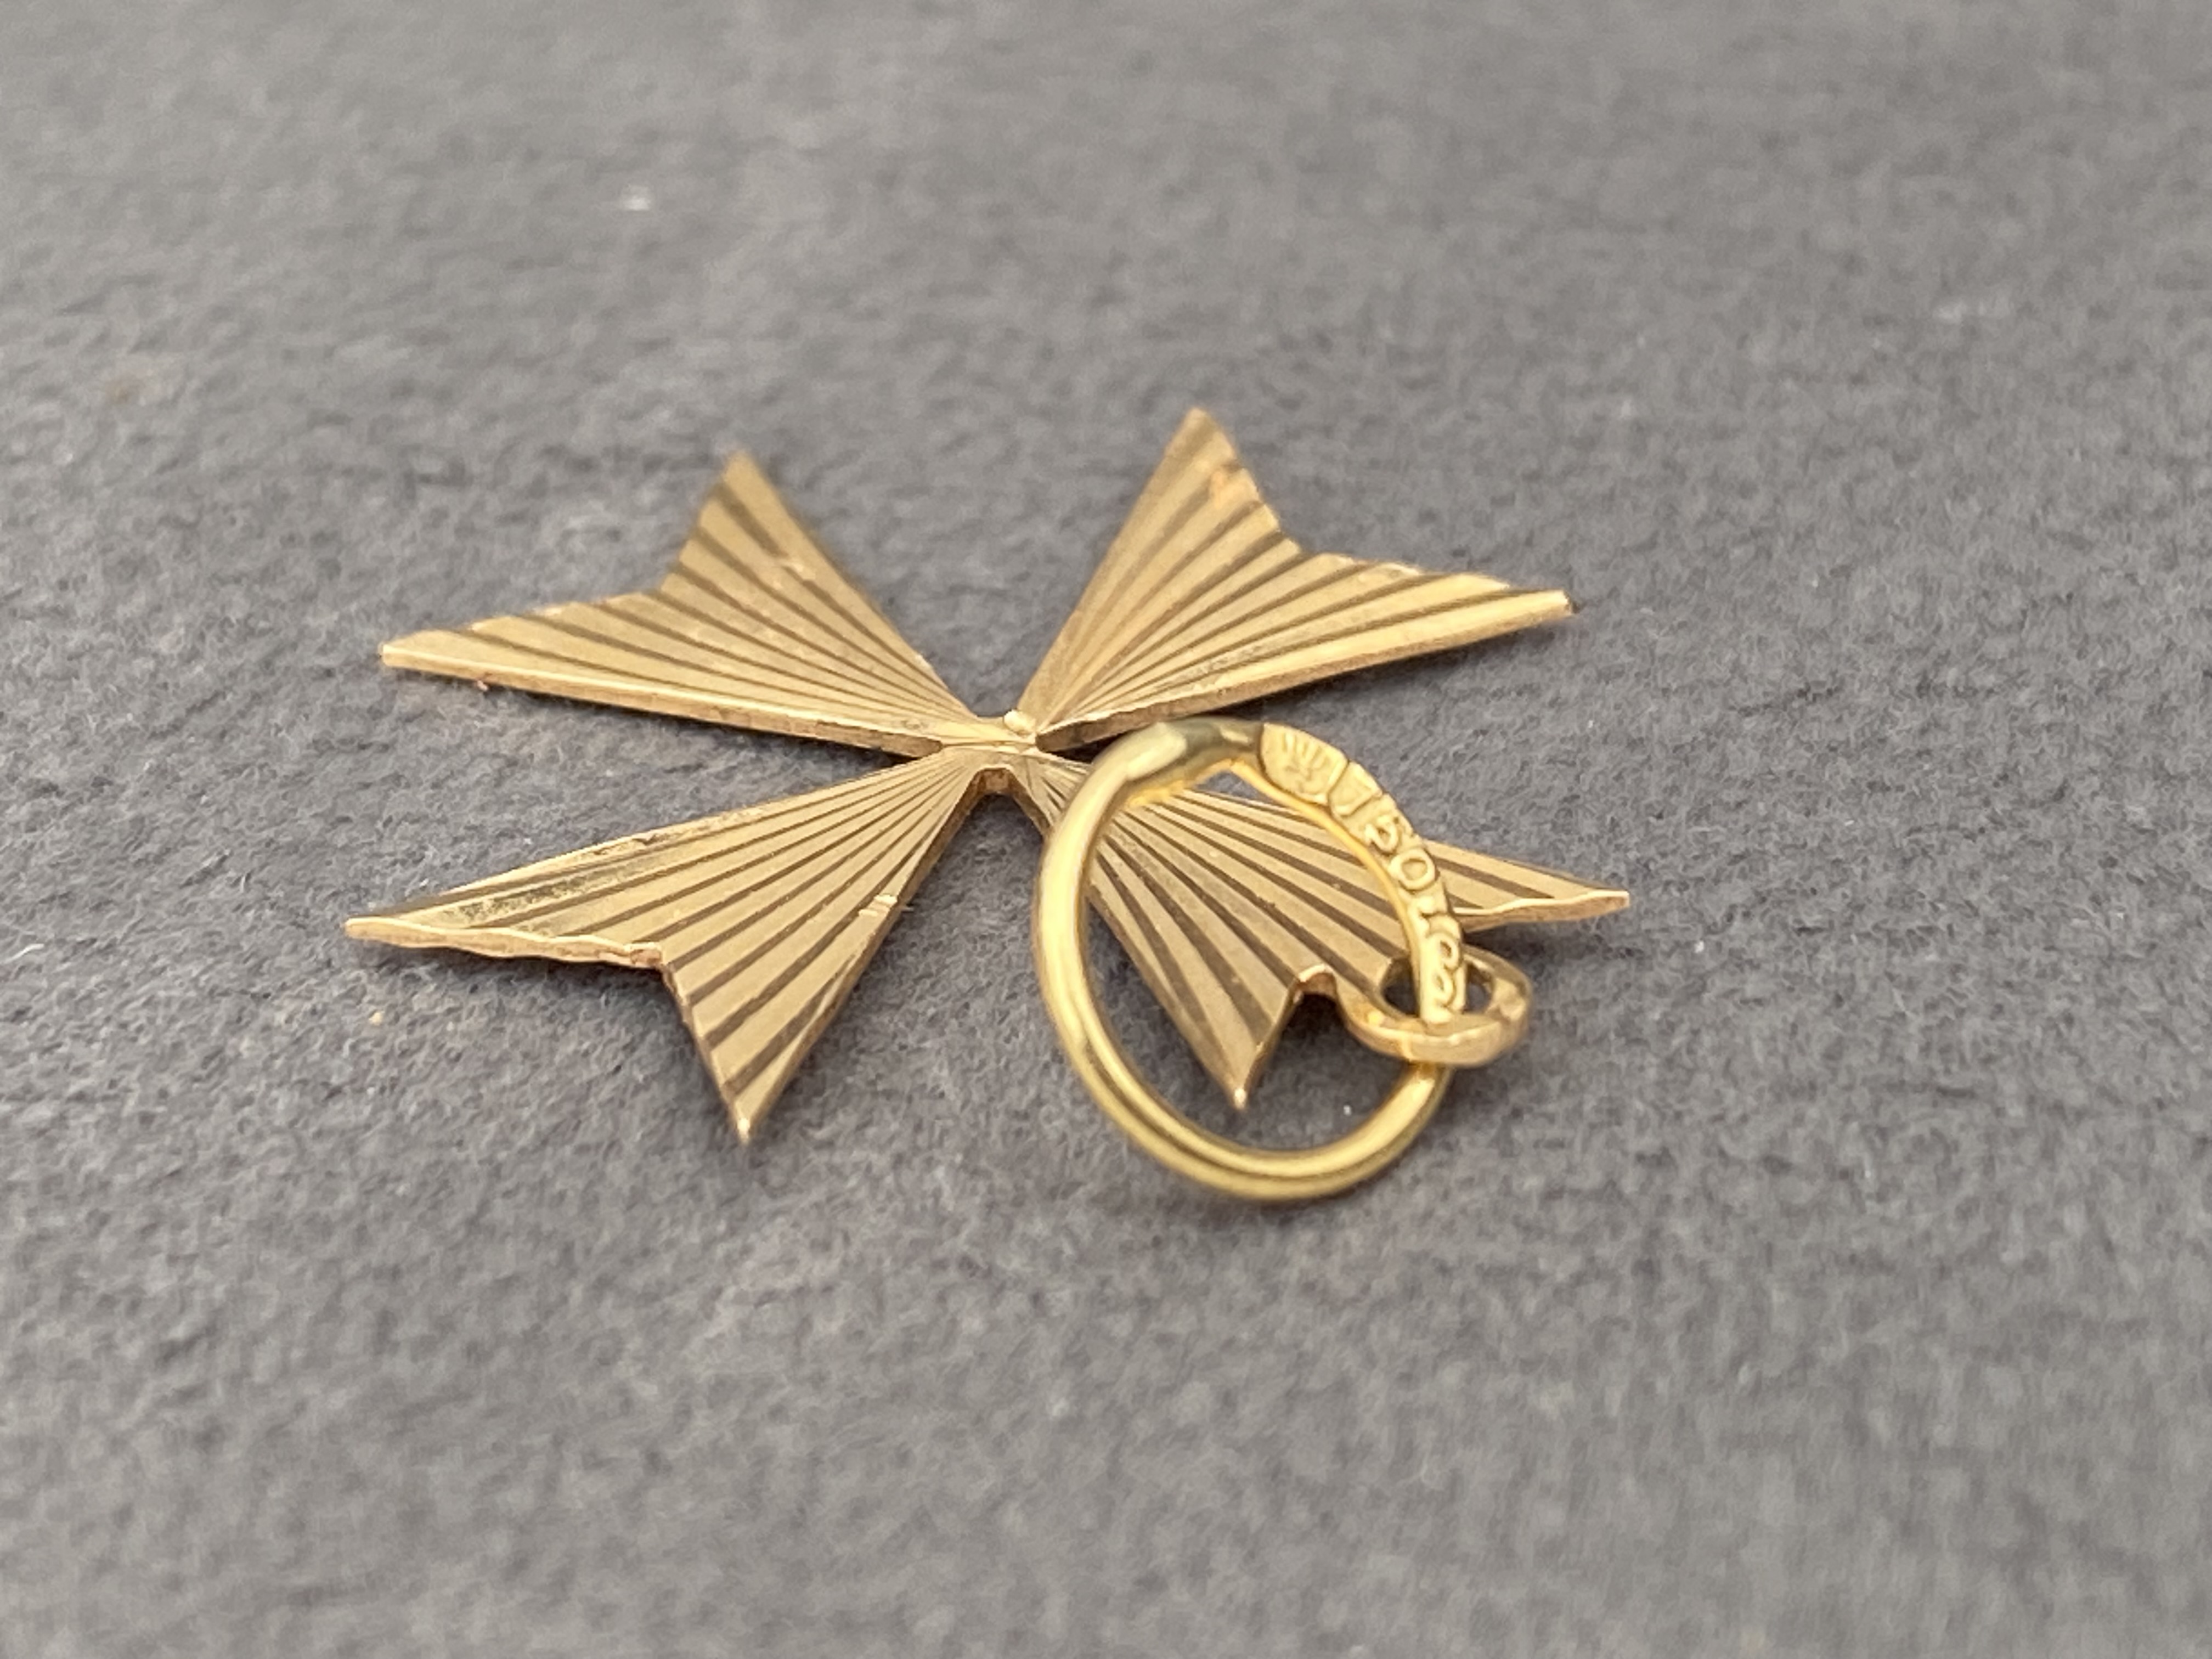 18ct gold Maltese cross pendant weighing 0.69 grams - Image 2 of 2